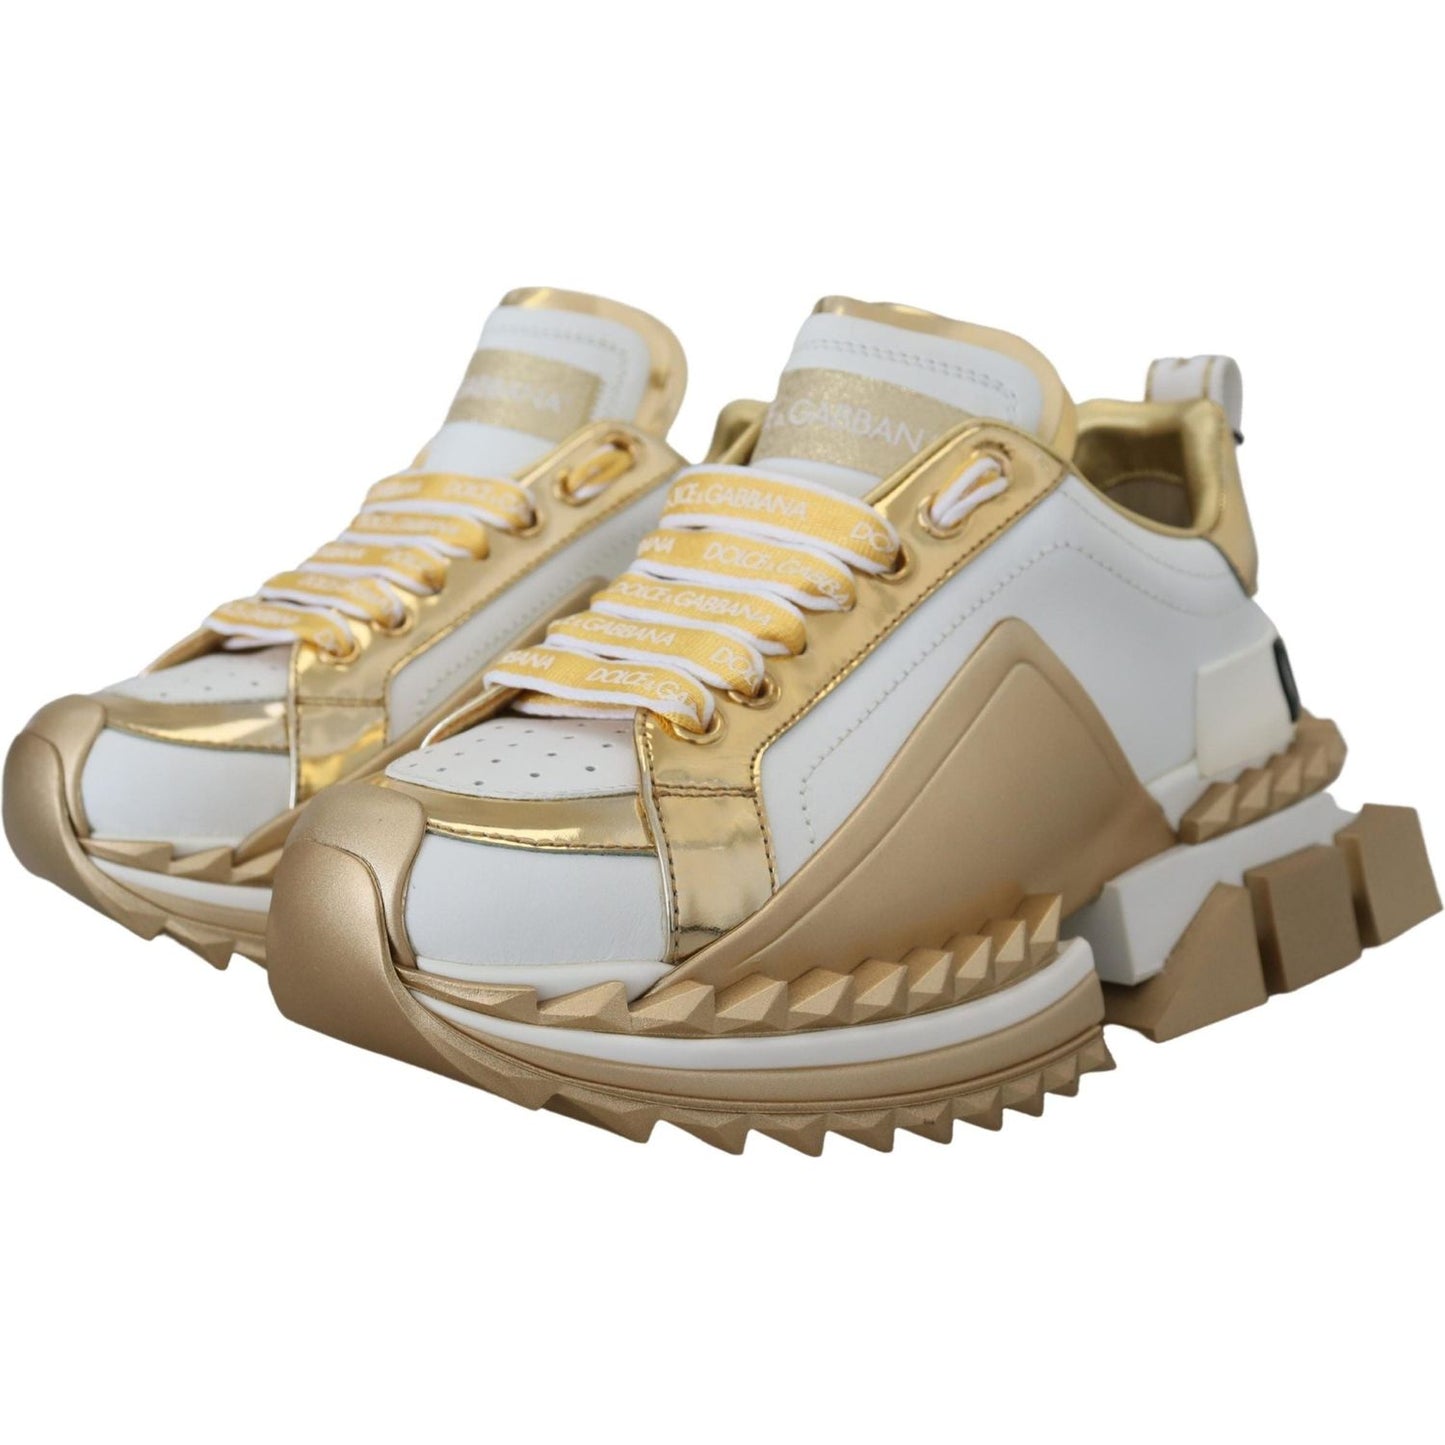 Dolce & Gabbana Elegant White and Gold Leather Sneakers white-and-gold-super-queen-leather-shoes